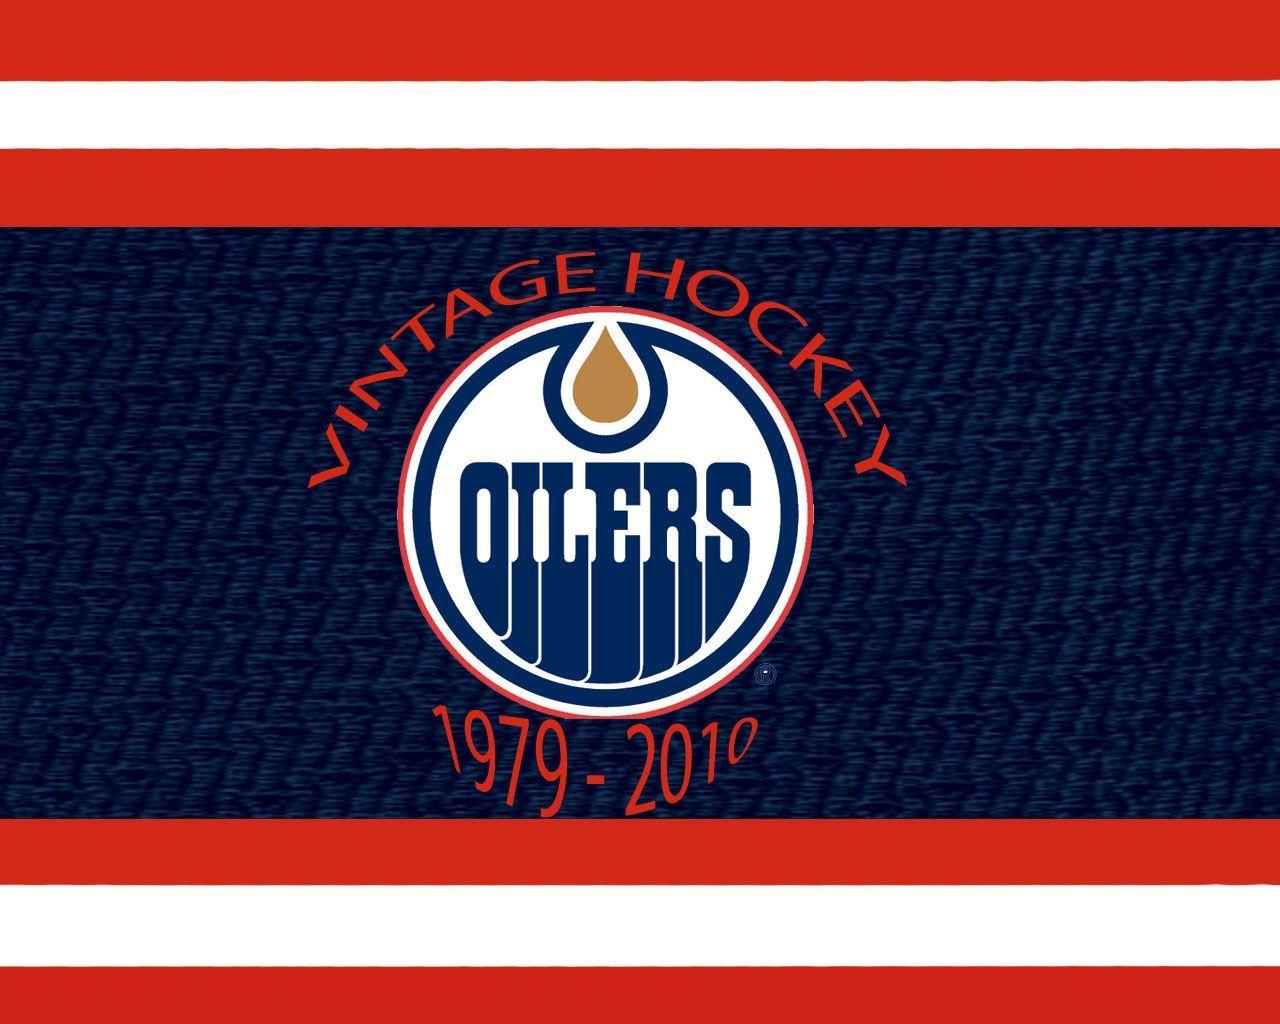 More Edmonton Oilers wallpaper. Edmonton Oilers wallpaper